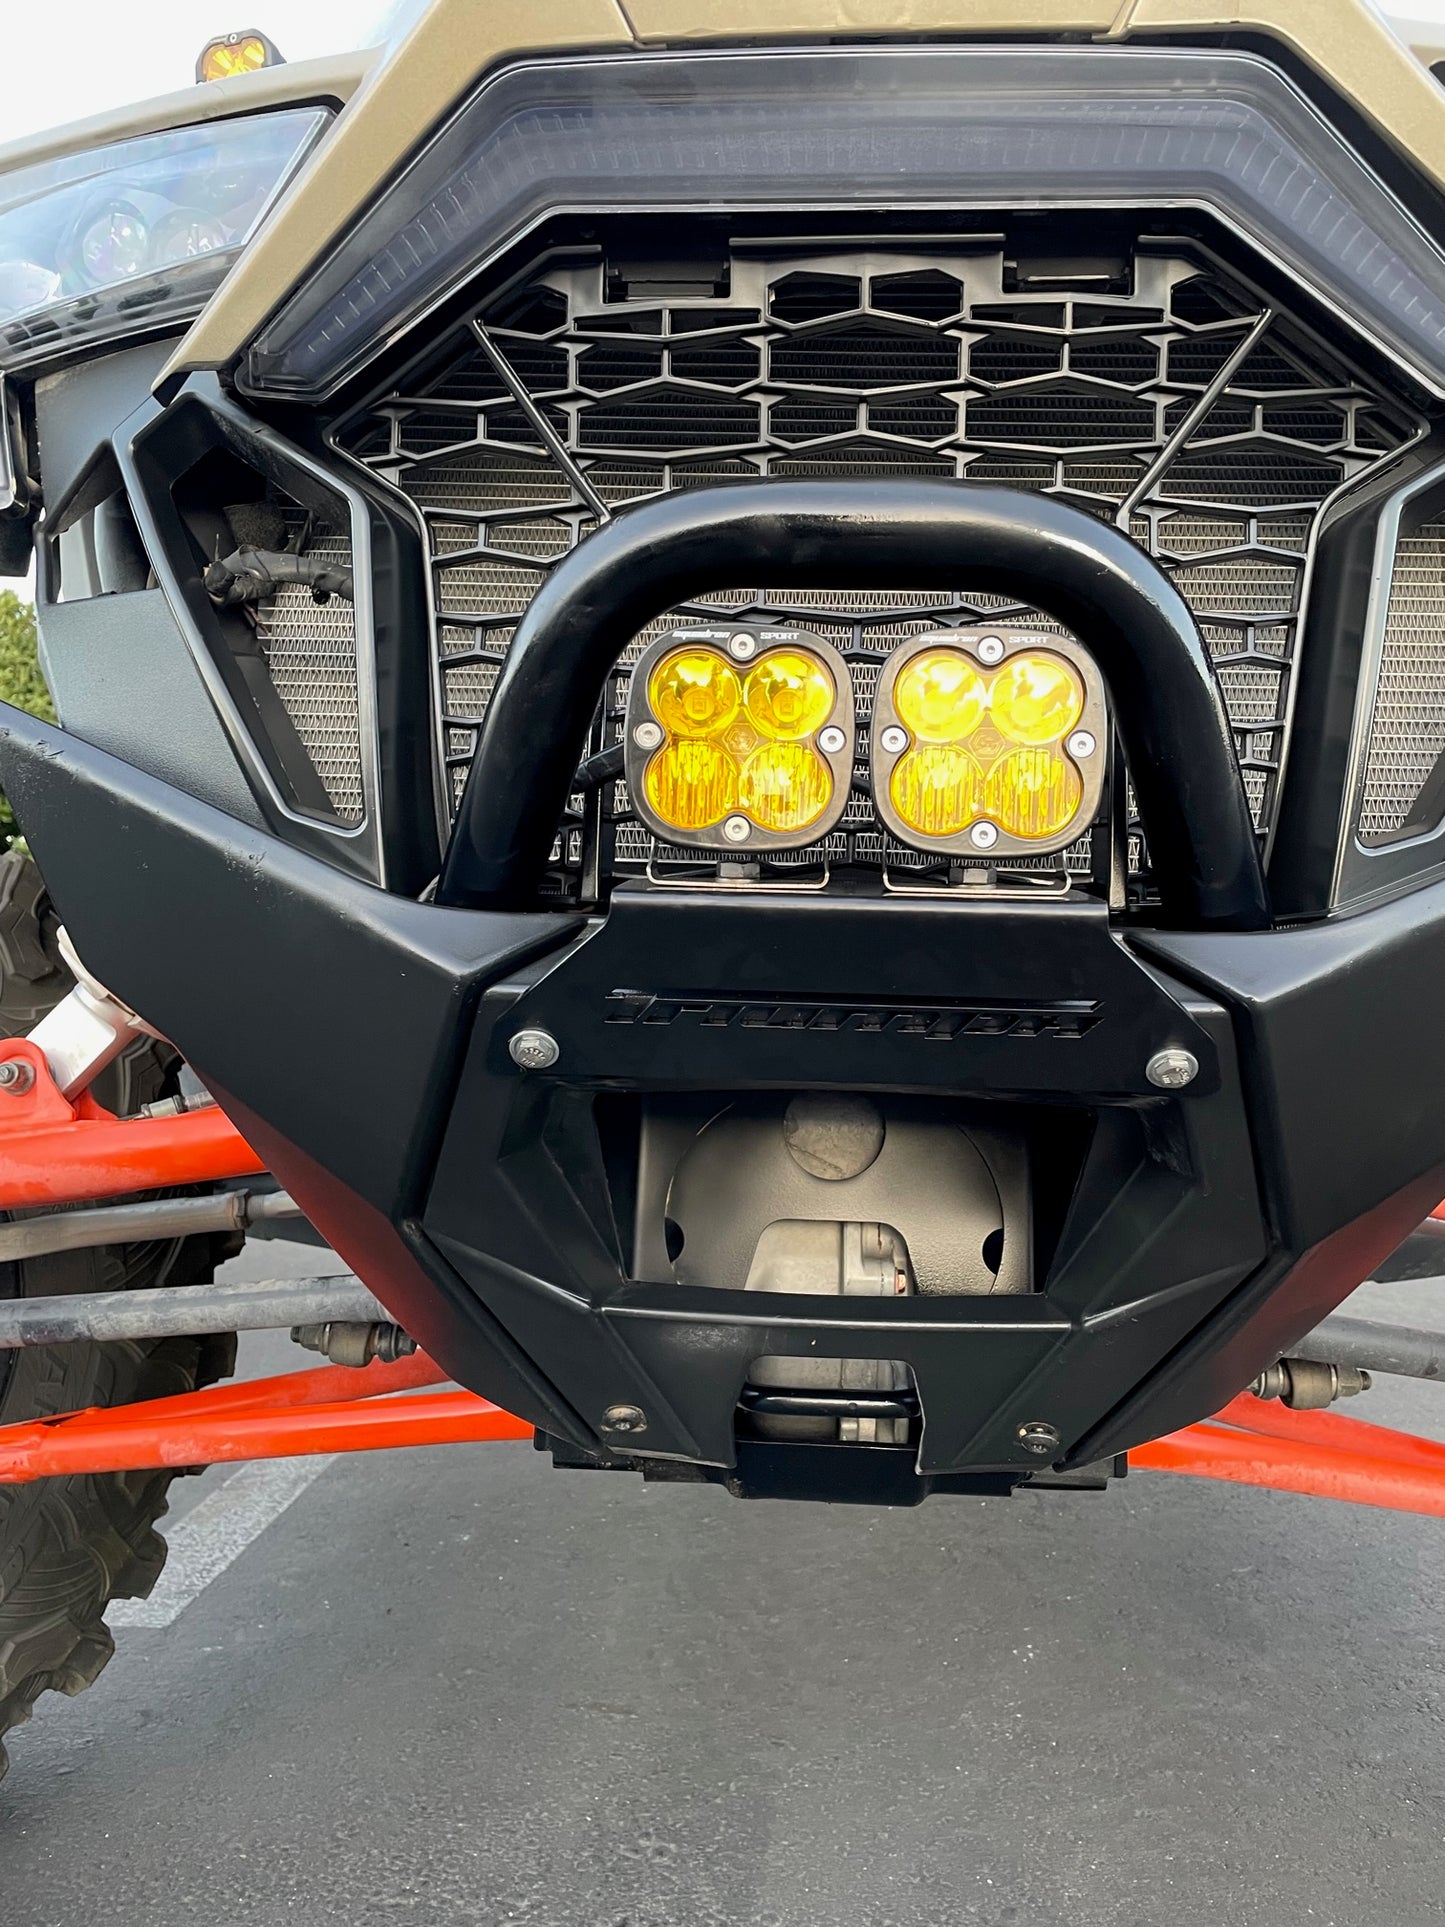 RAGING MOTORSPORTS POLARIS RZR PRO XP front light mount